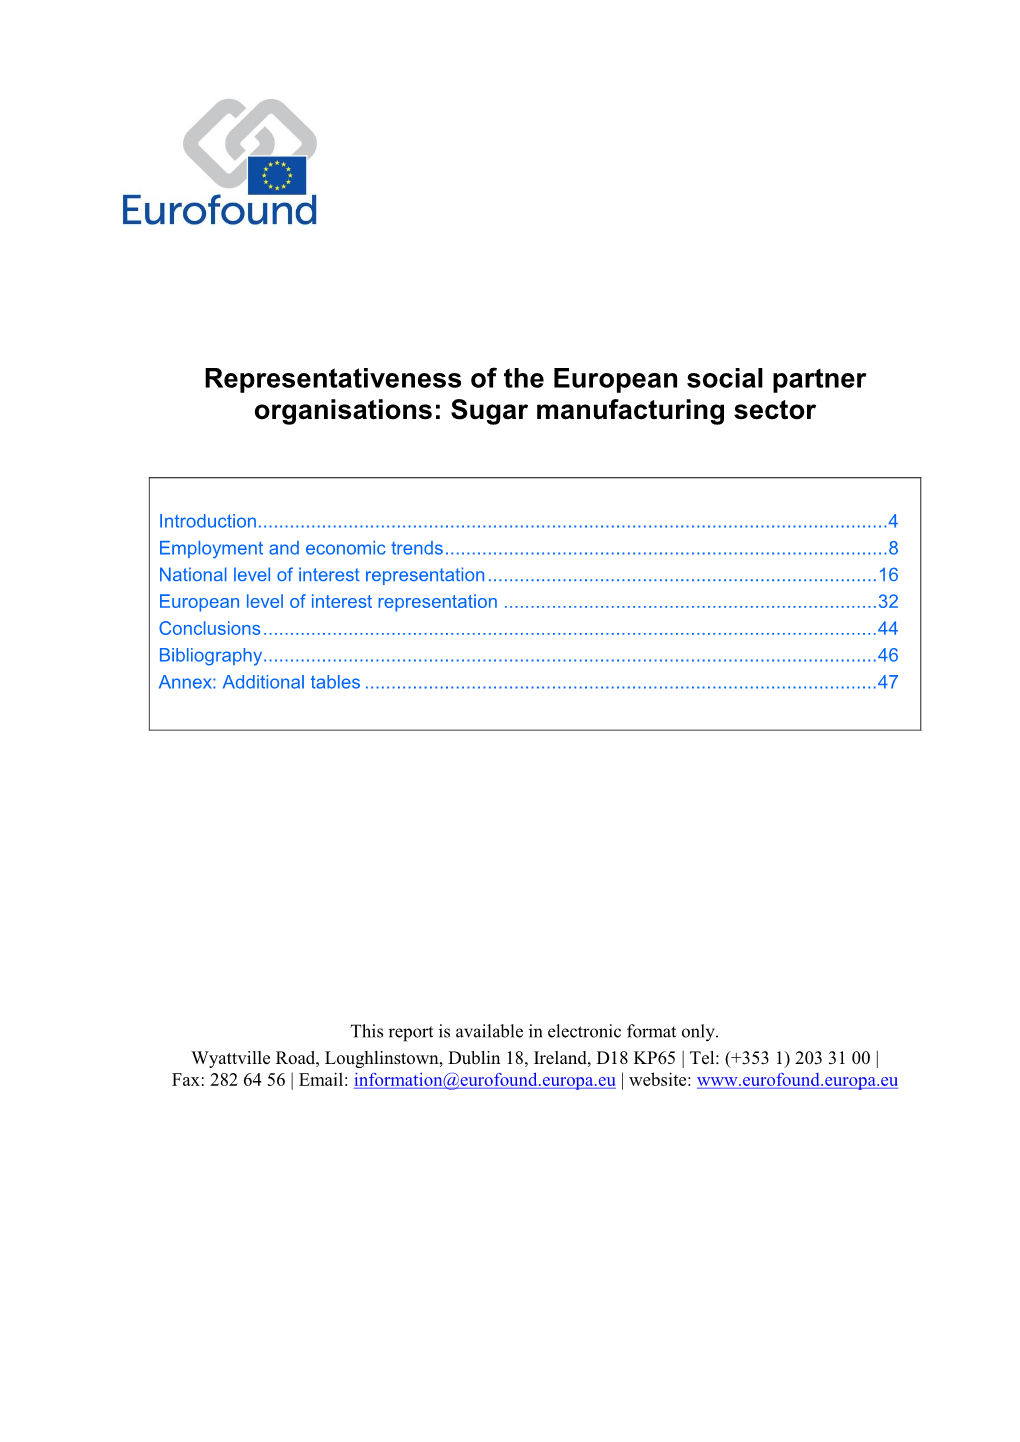 Representativeness of the European Social Partner Organisations: Sugar Manufacturing Sector